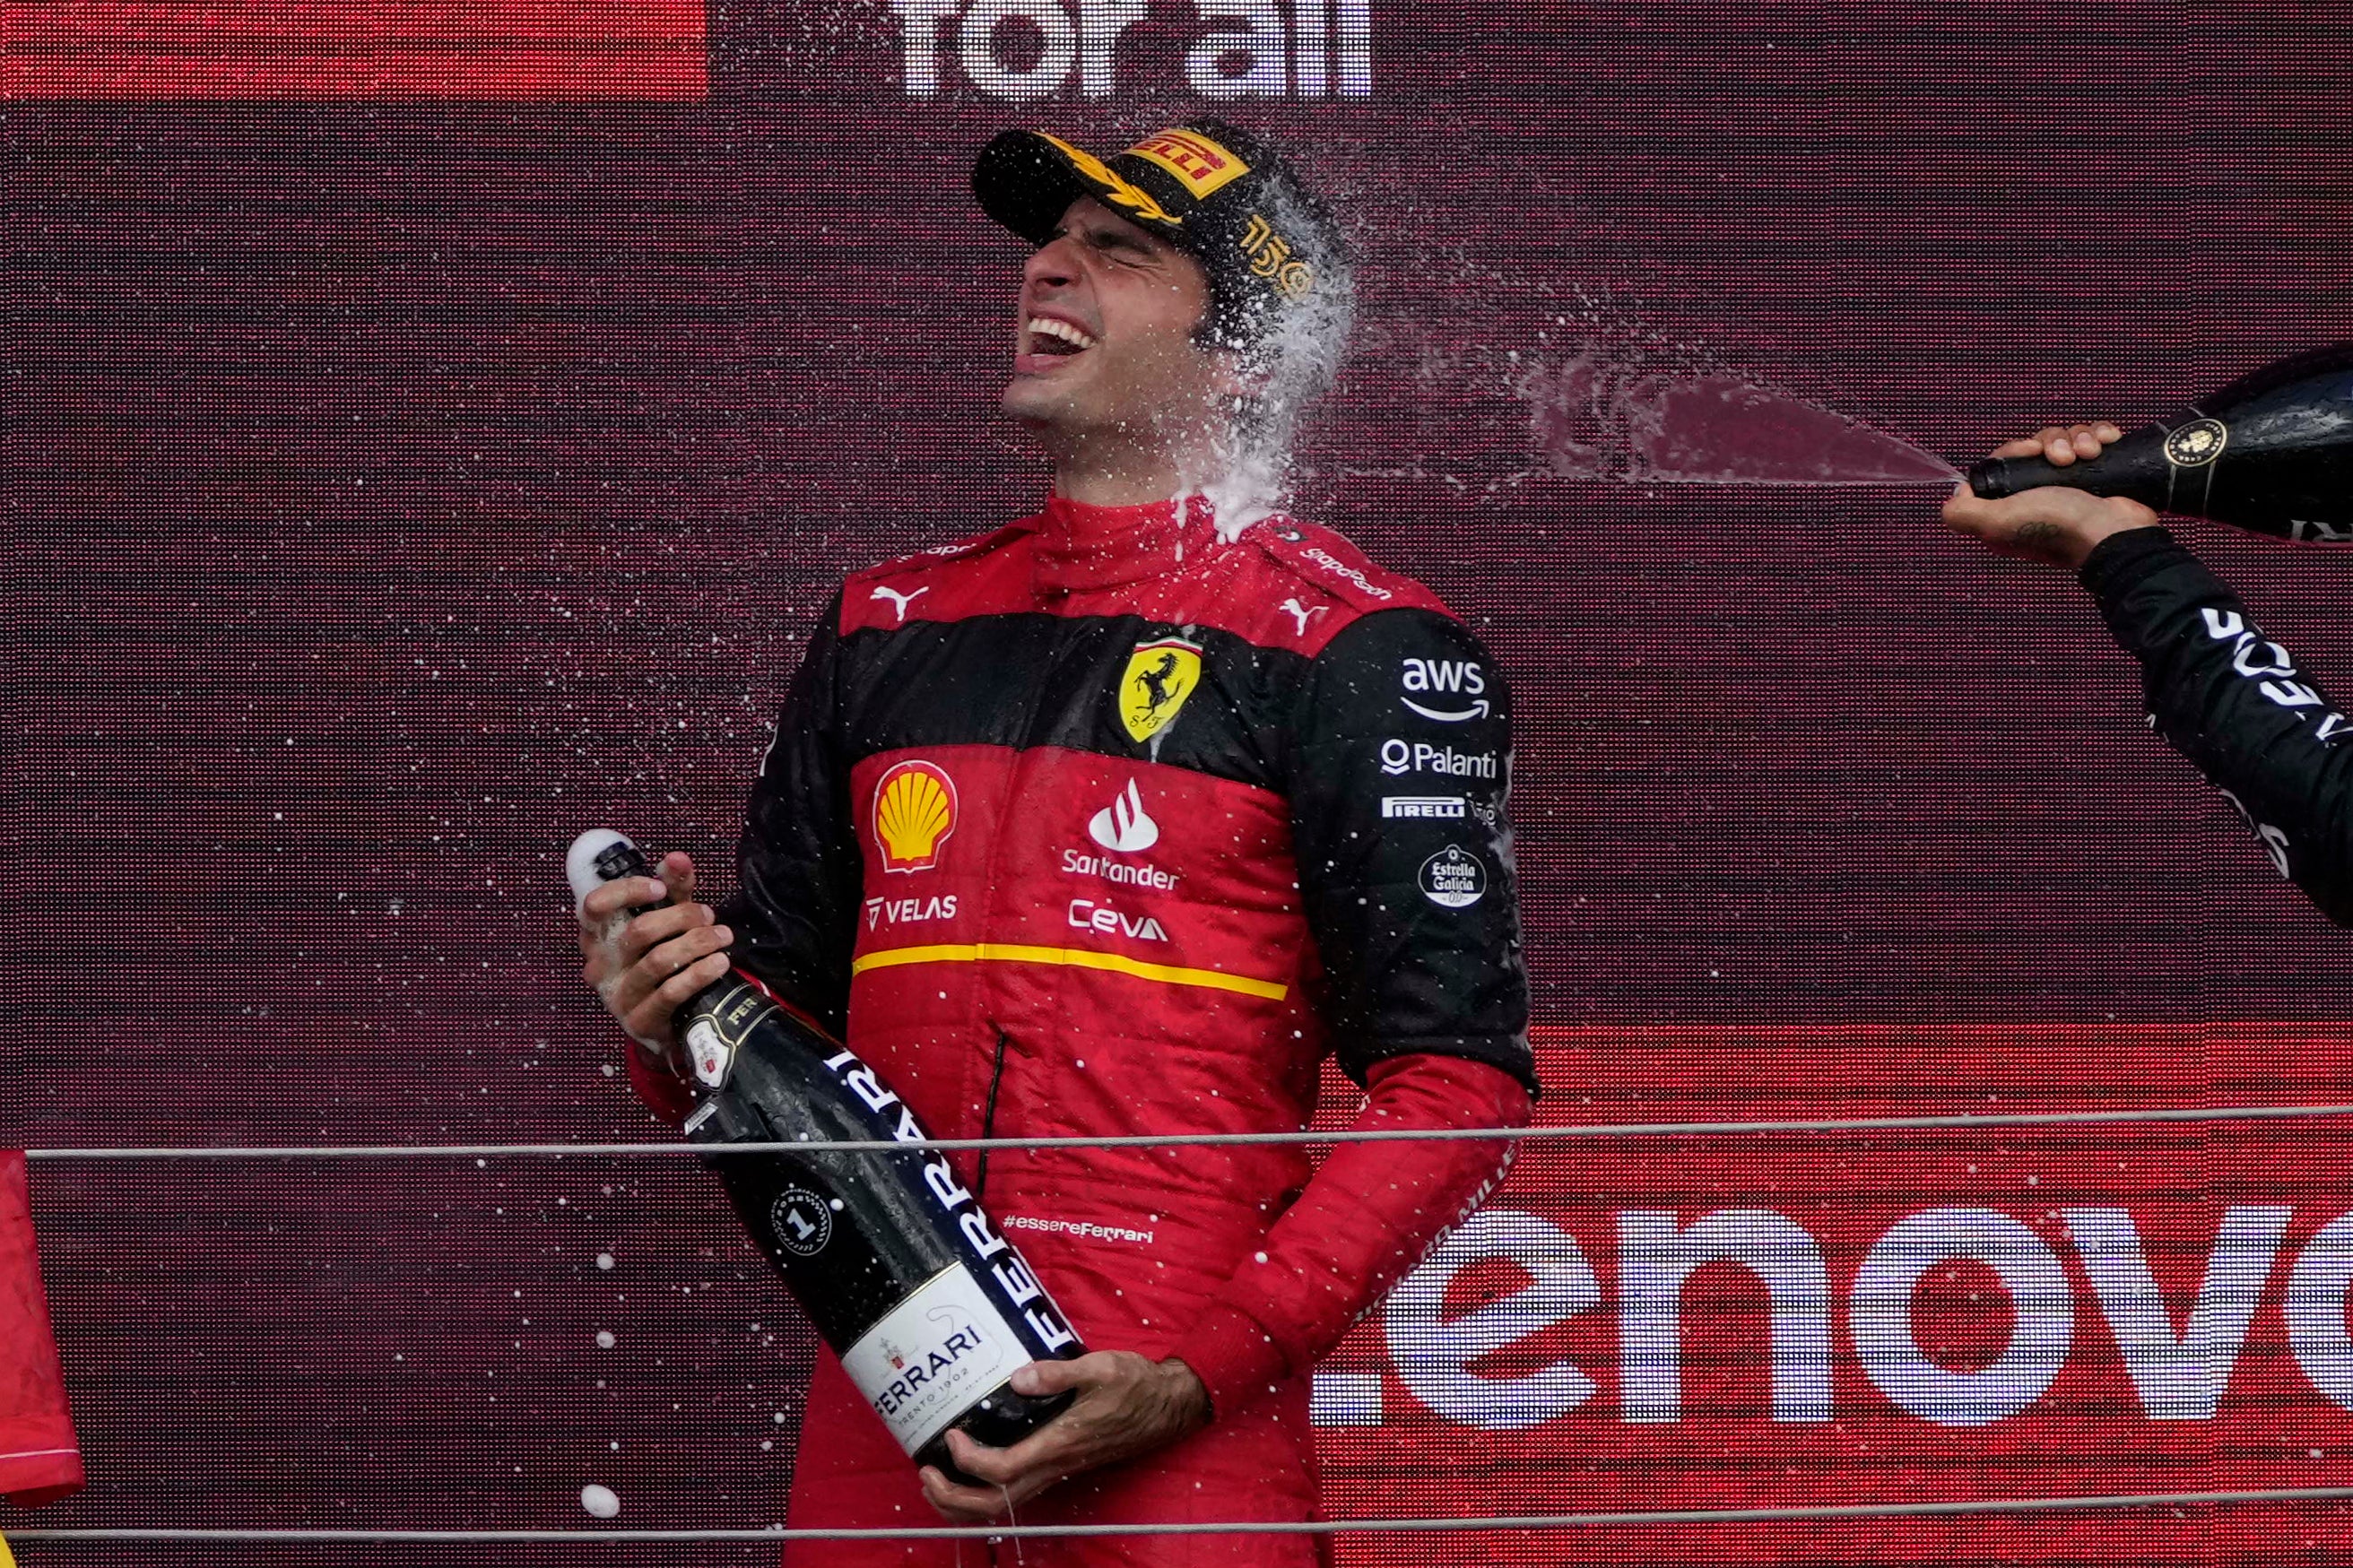 Carlos Sainz won his first Formula 1 race last year at Silverstone